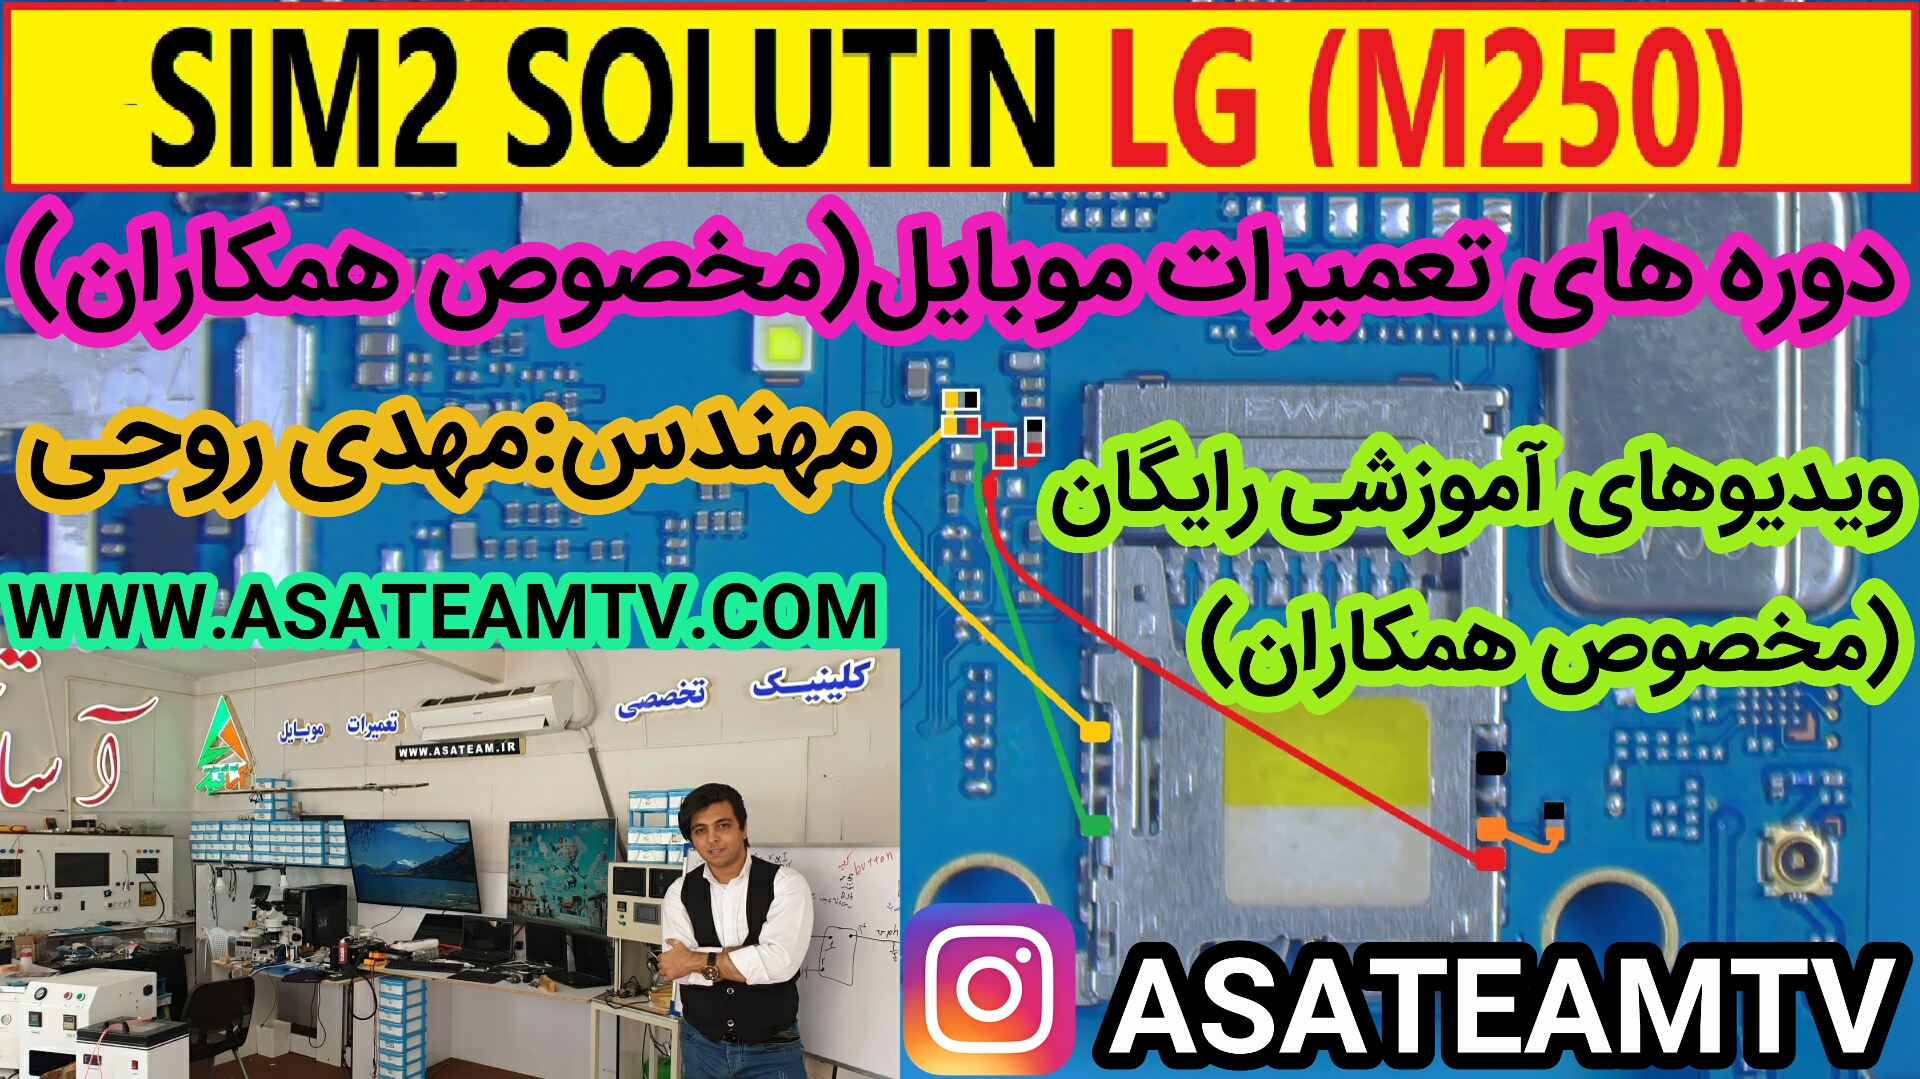 SIM2 SOLUTION M250